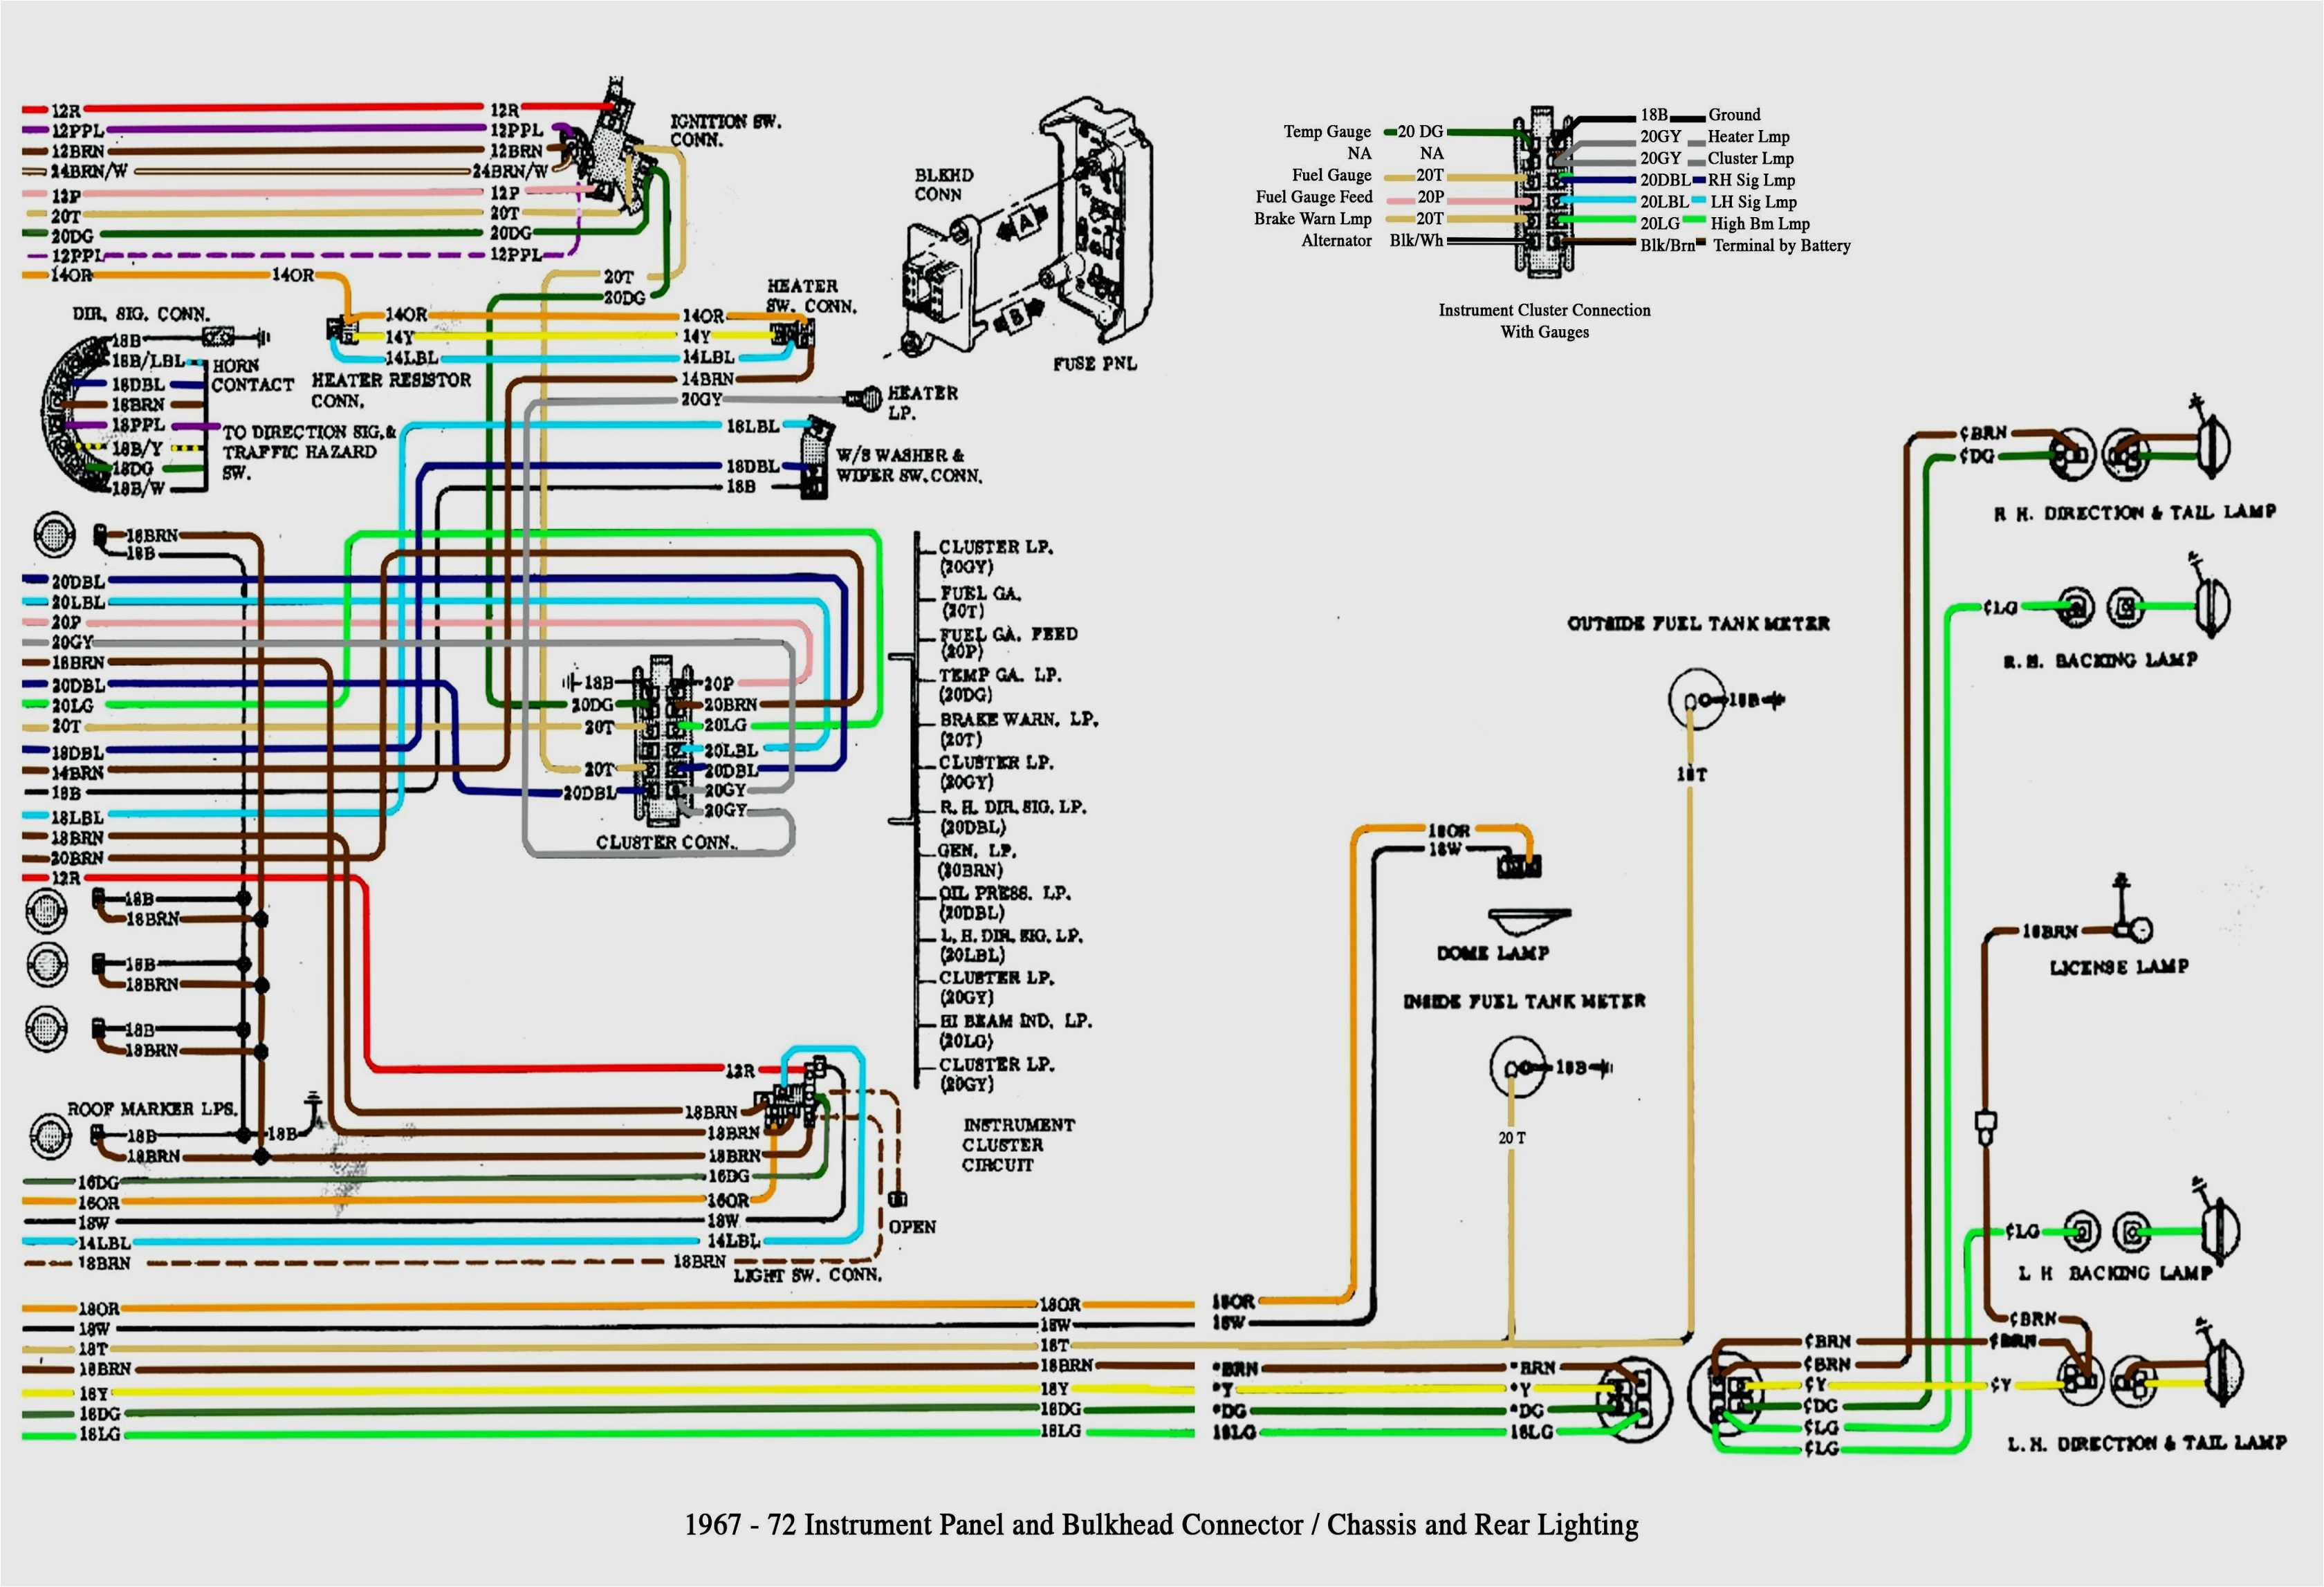 2000 chevy impala wiring diagram electrical diagram 2002 chevy silverado diy enthusiasts wiring of 2000 chevy impala wiring diagram jpg